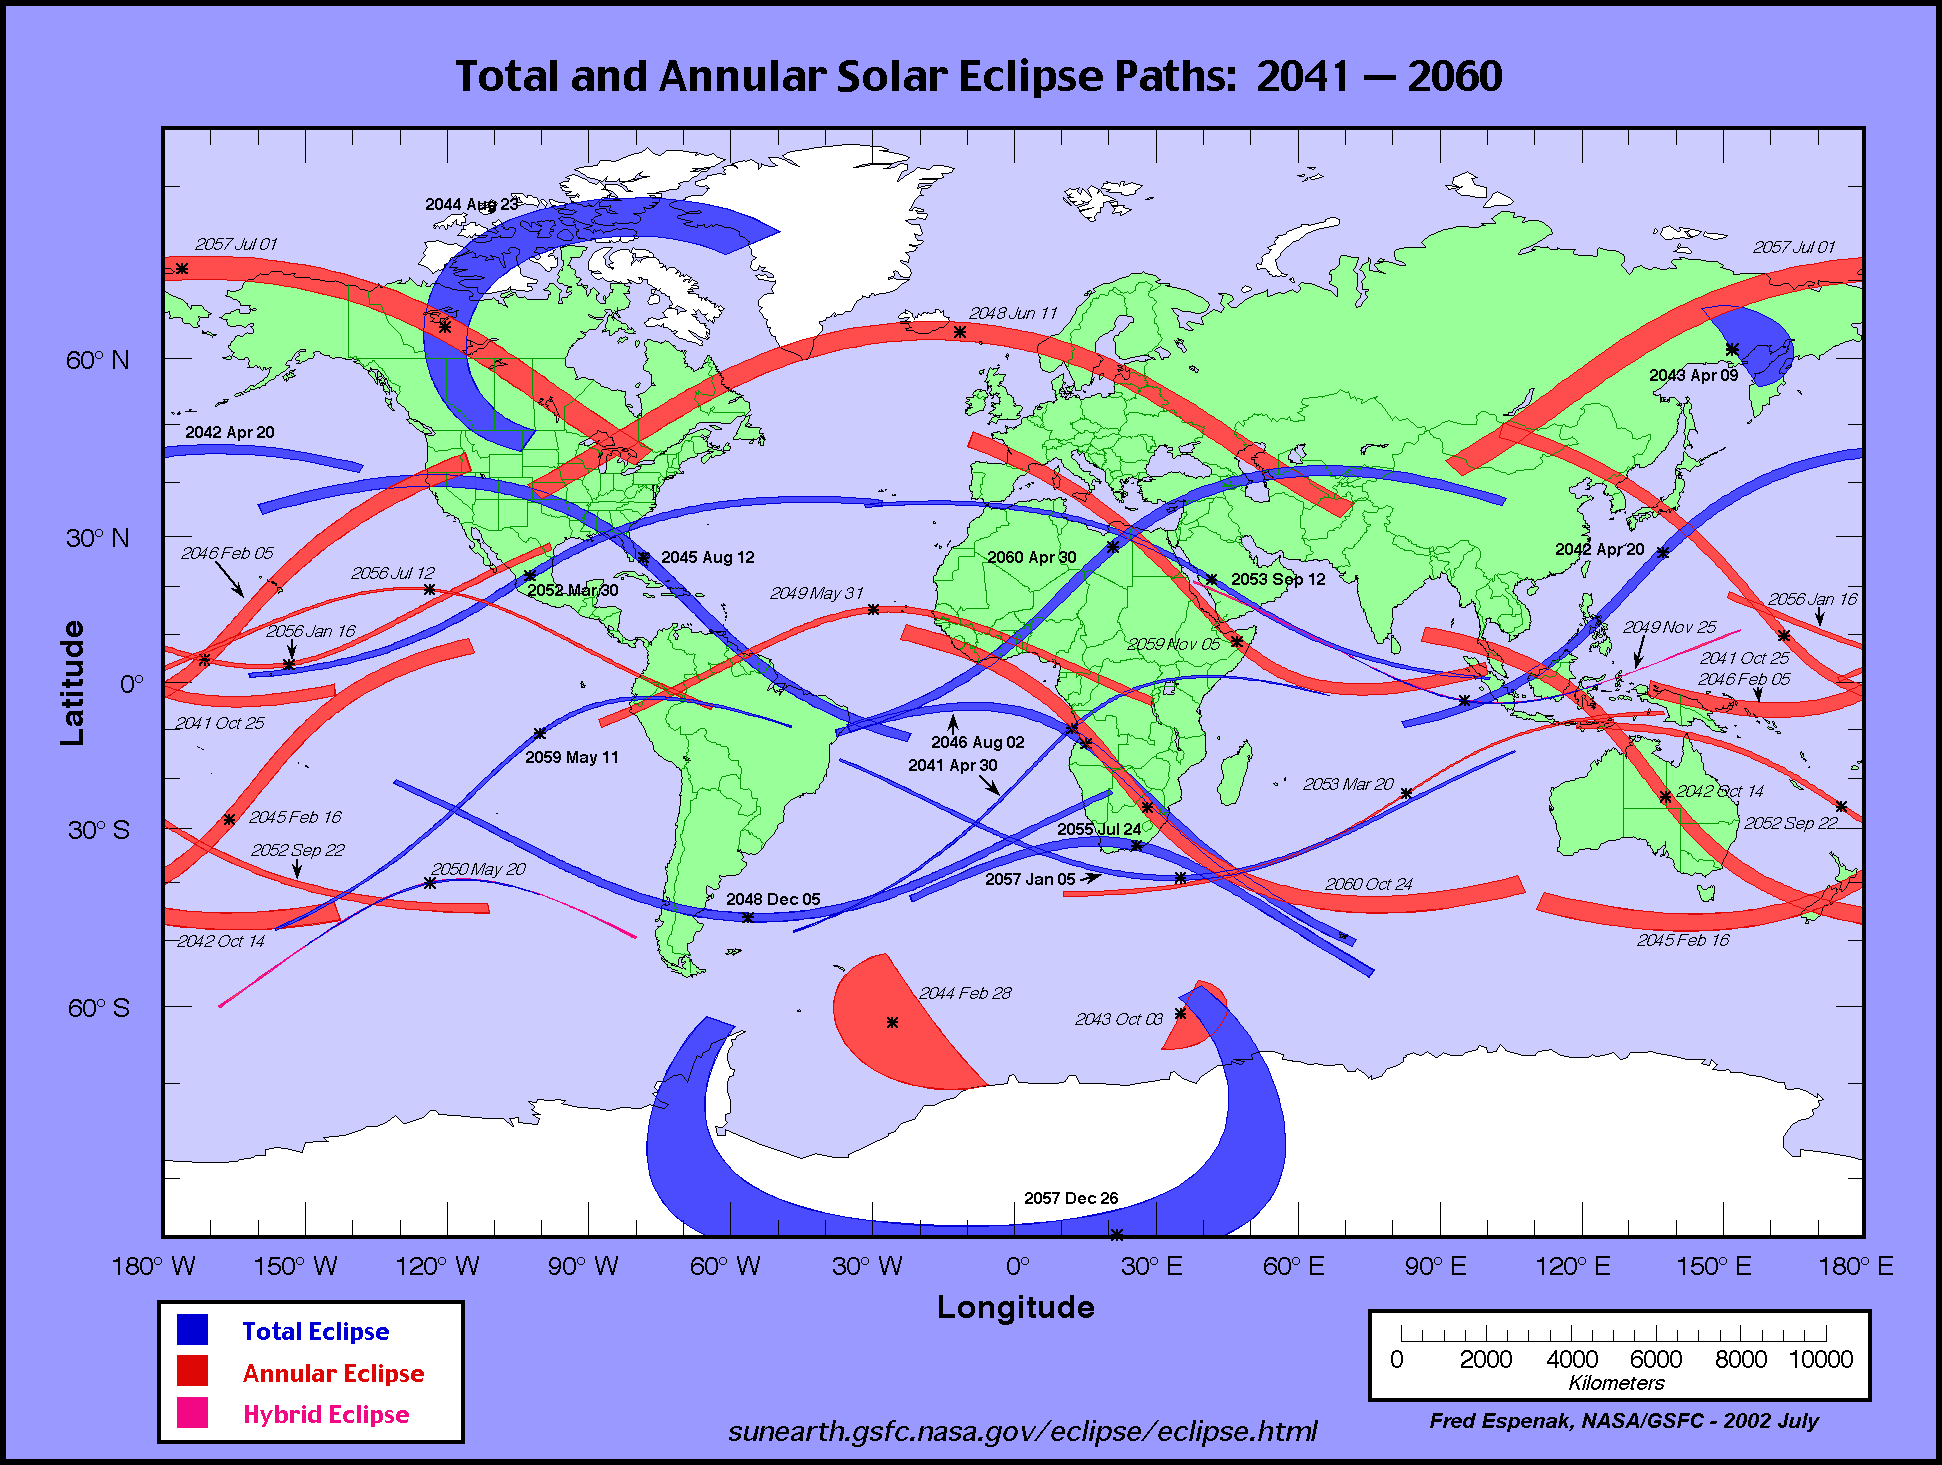 Gerhana Matahari tahun 2041 - 2060. (Sumber: http://eclipse.gsfc.nasa.gov/)